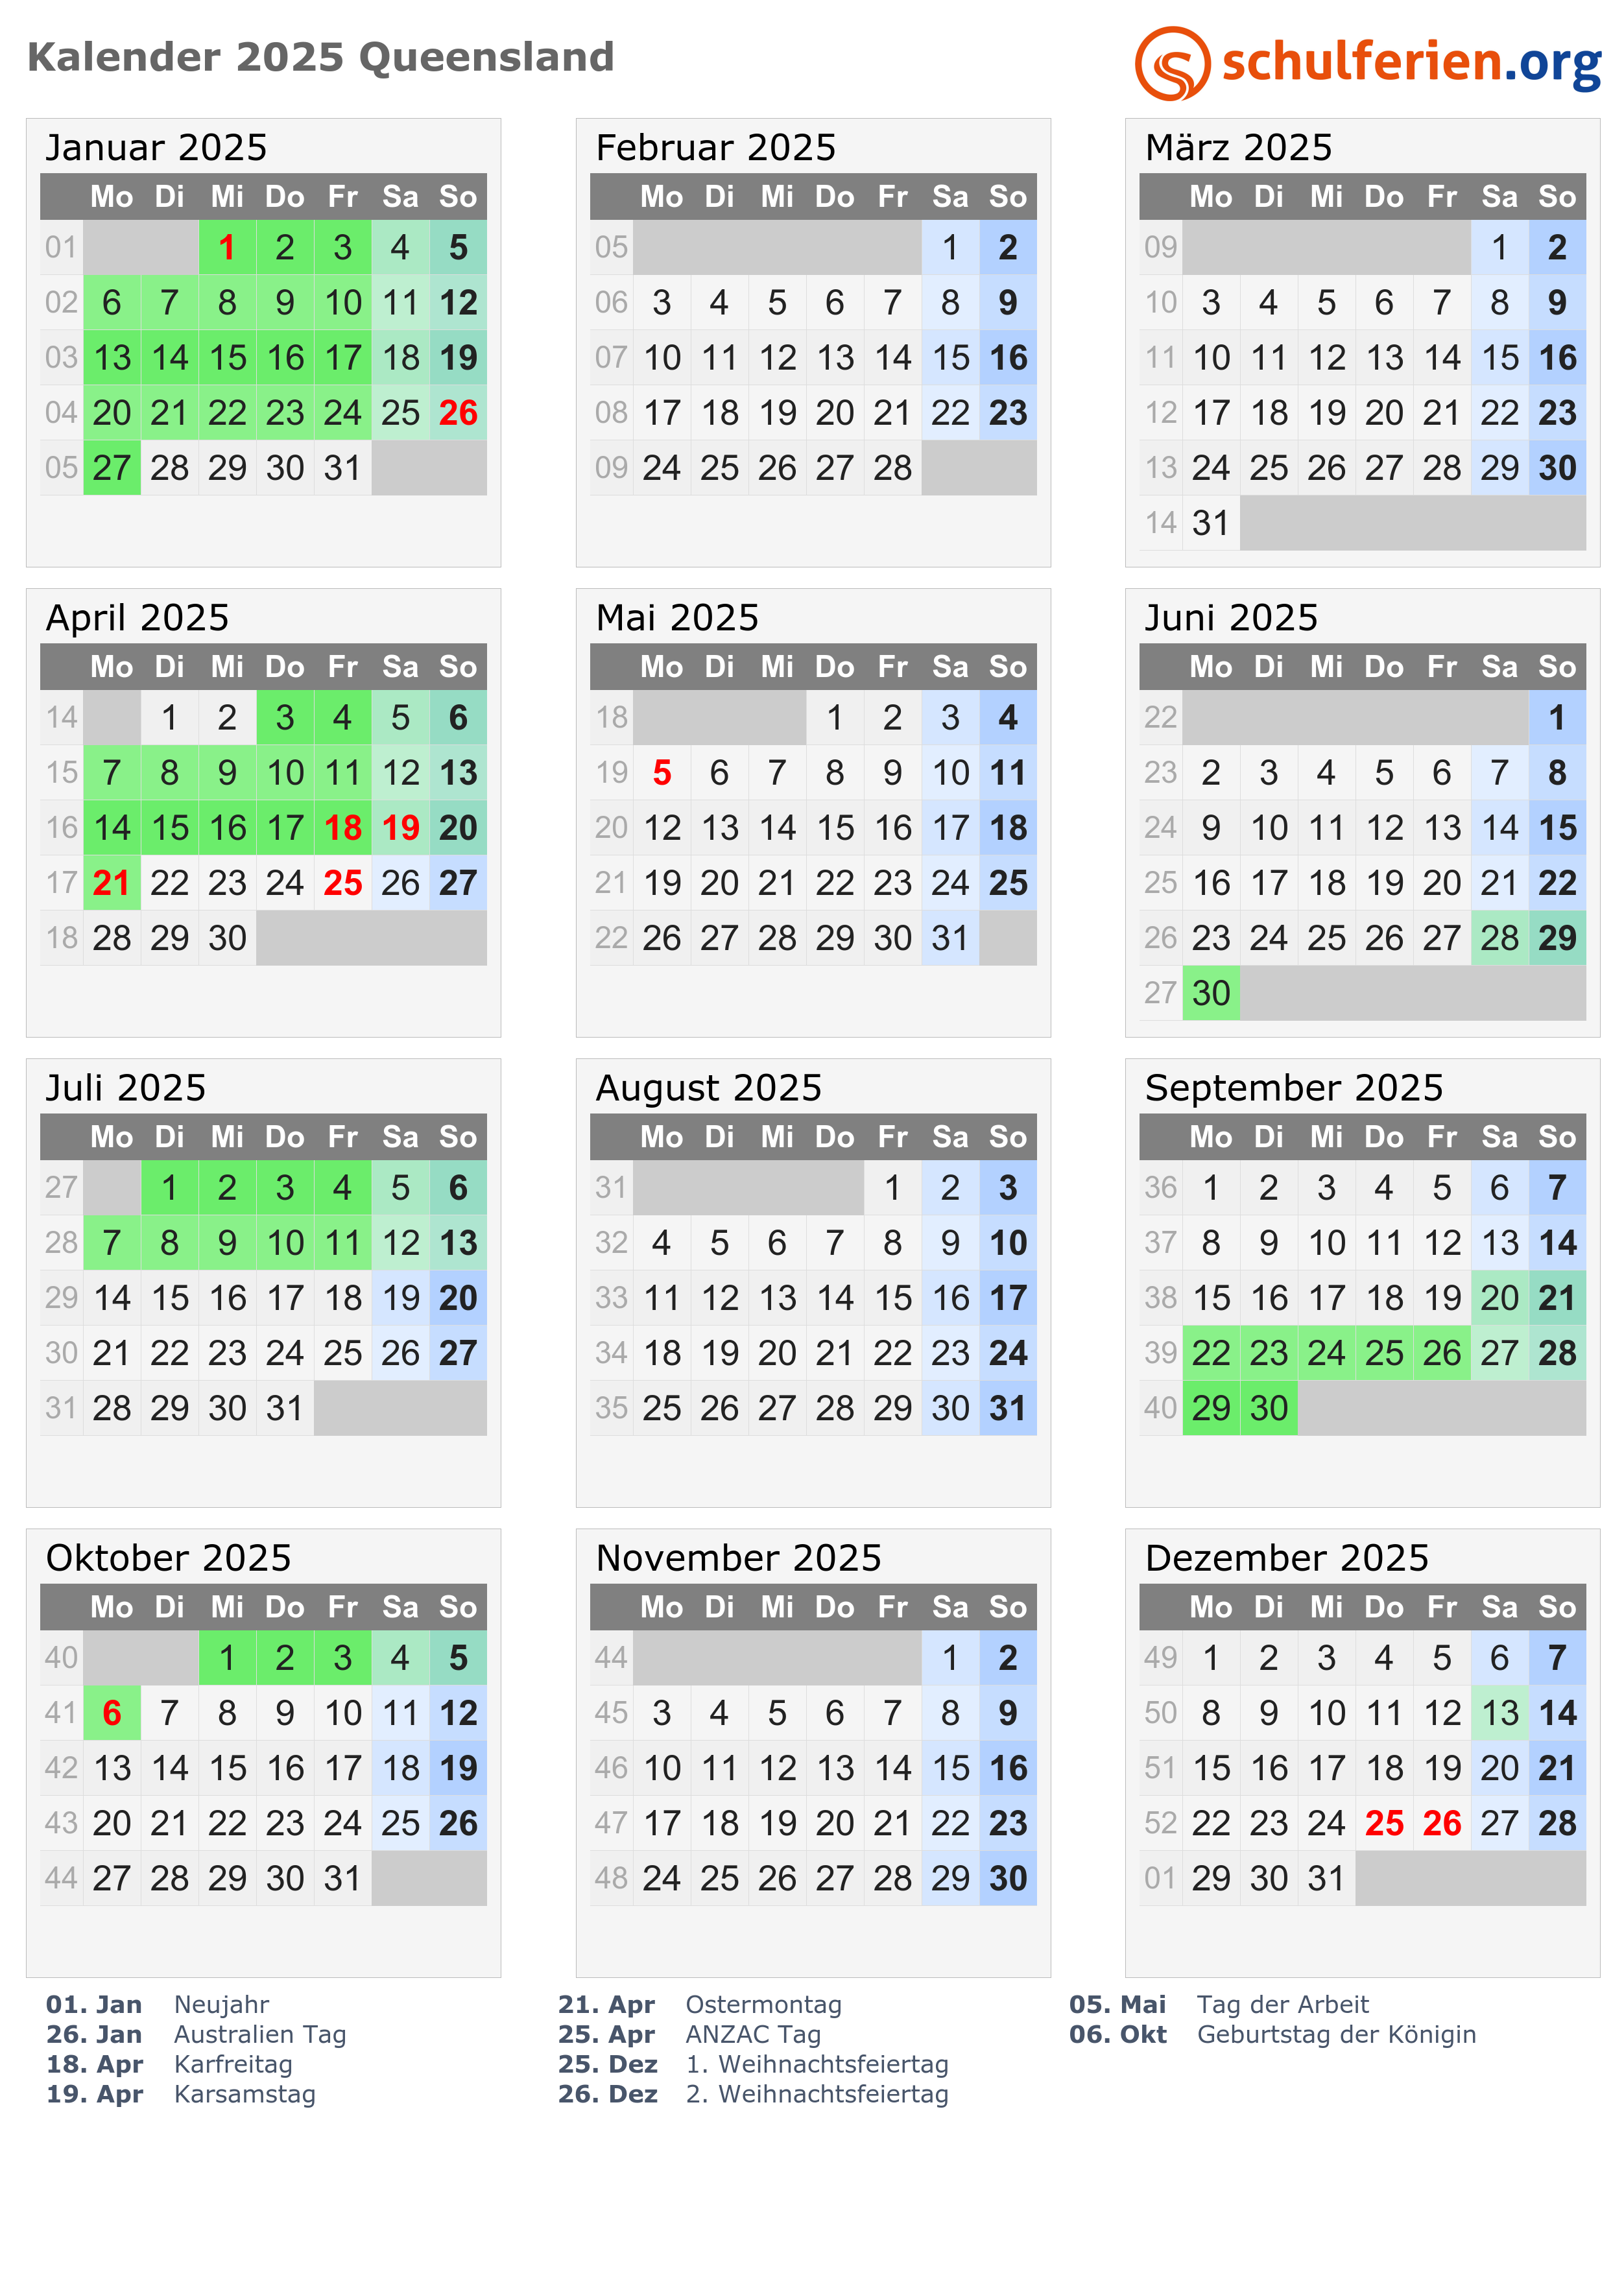 kalender-2025-queensland